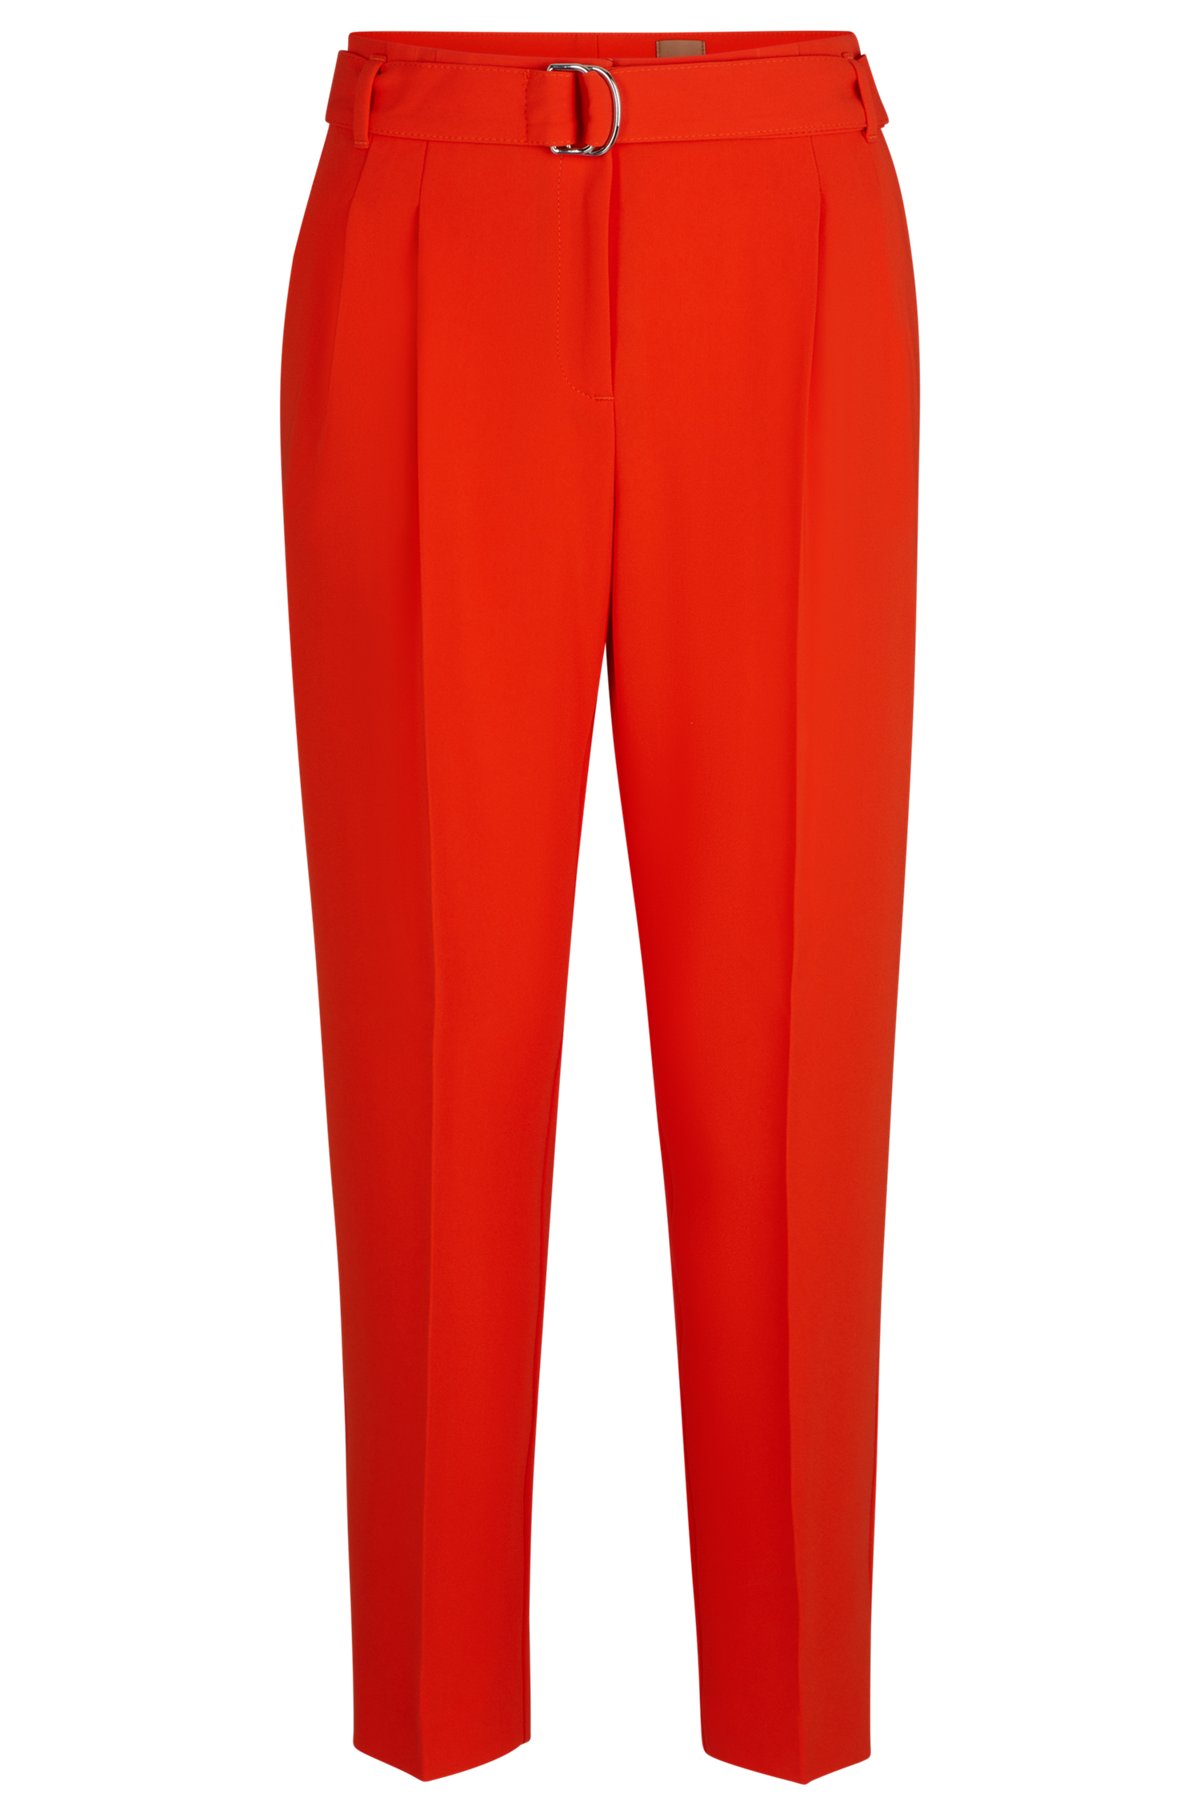 Pantalones tobilleros regular fit de crepé japonés, Naranja